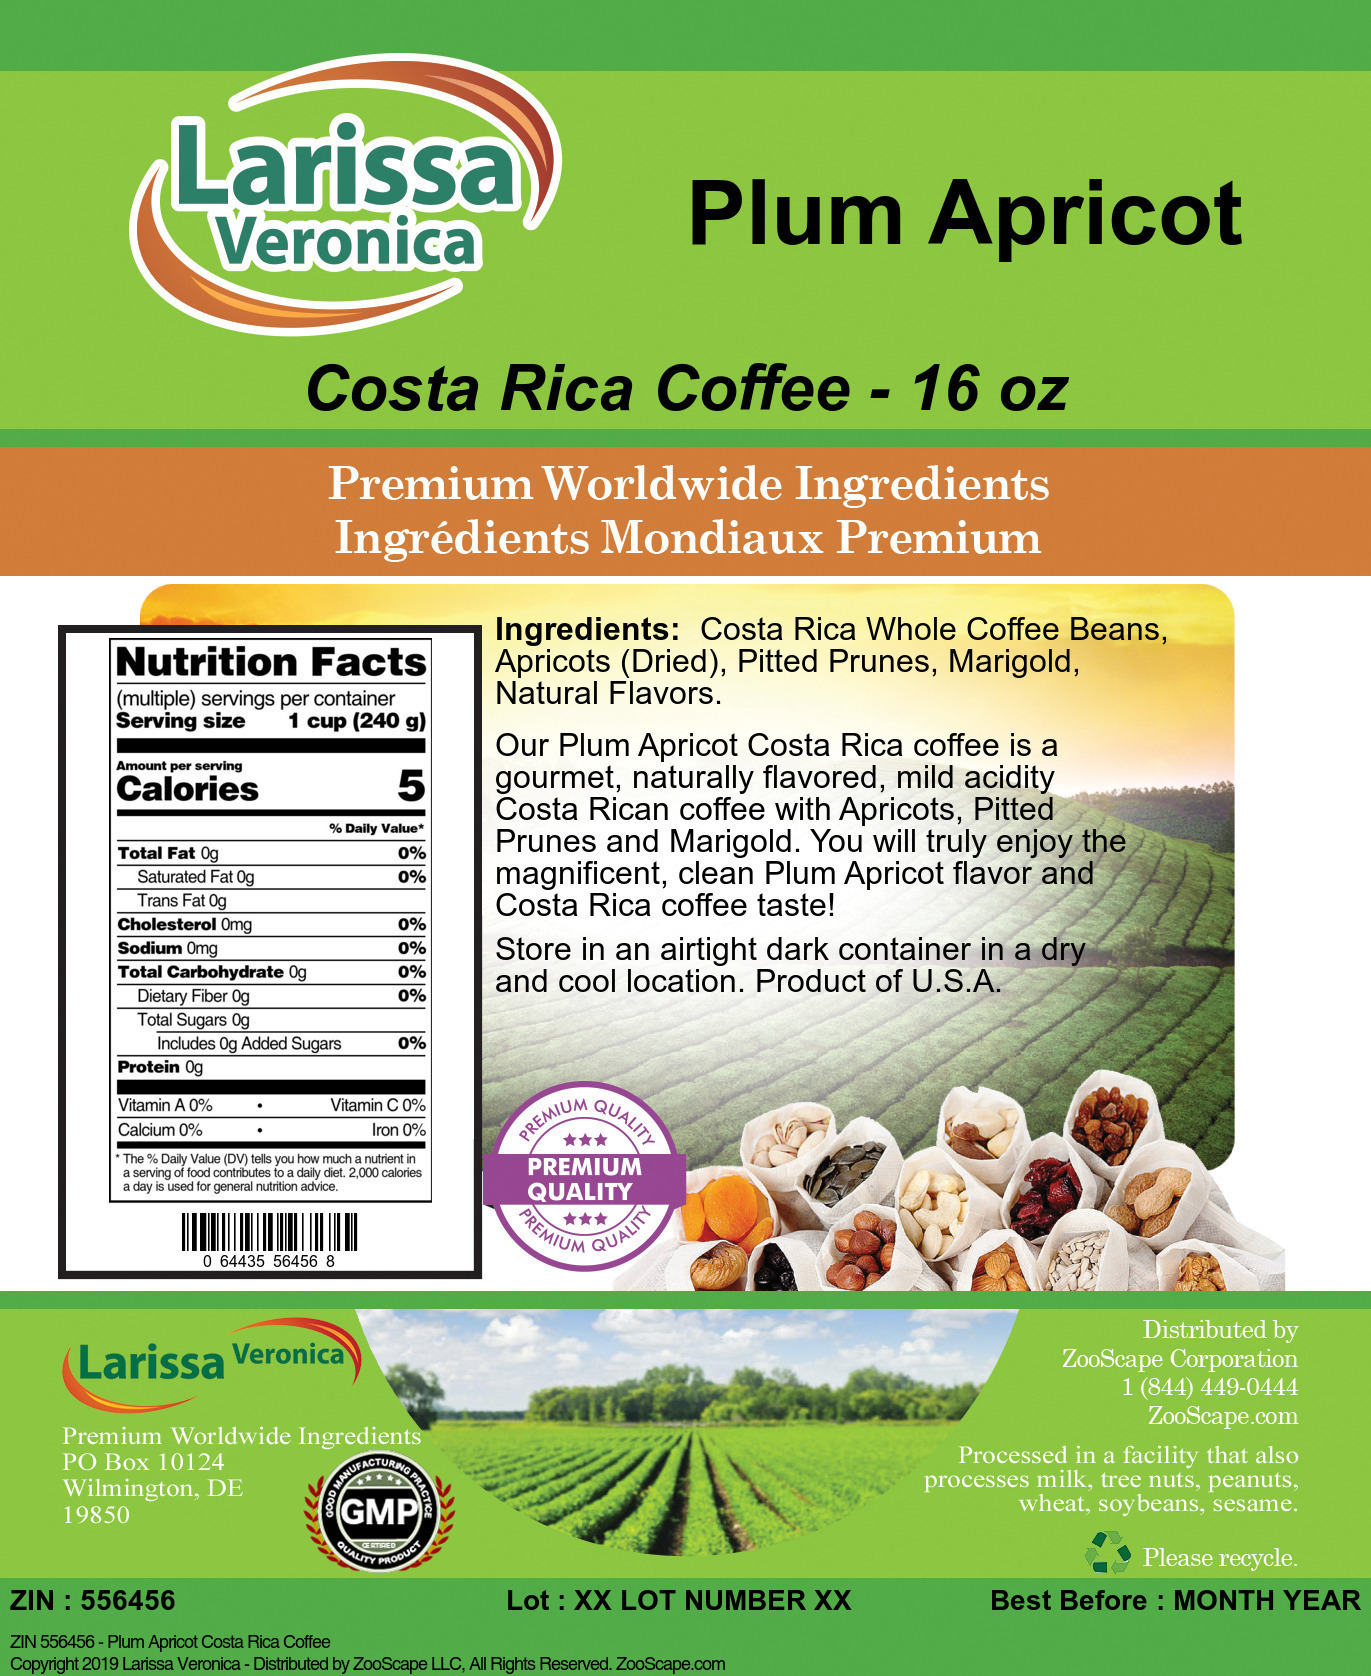 Plum Apricot Costa Rica Coffee - Label